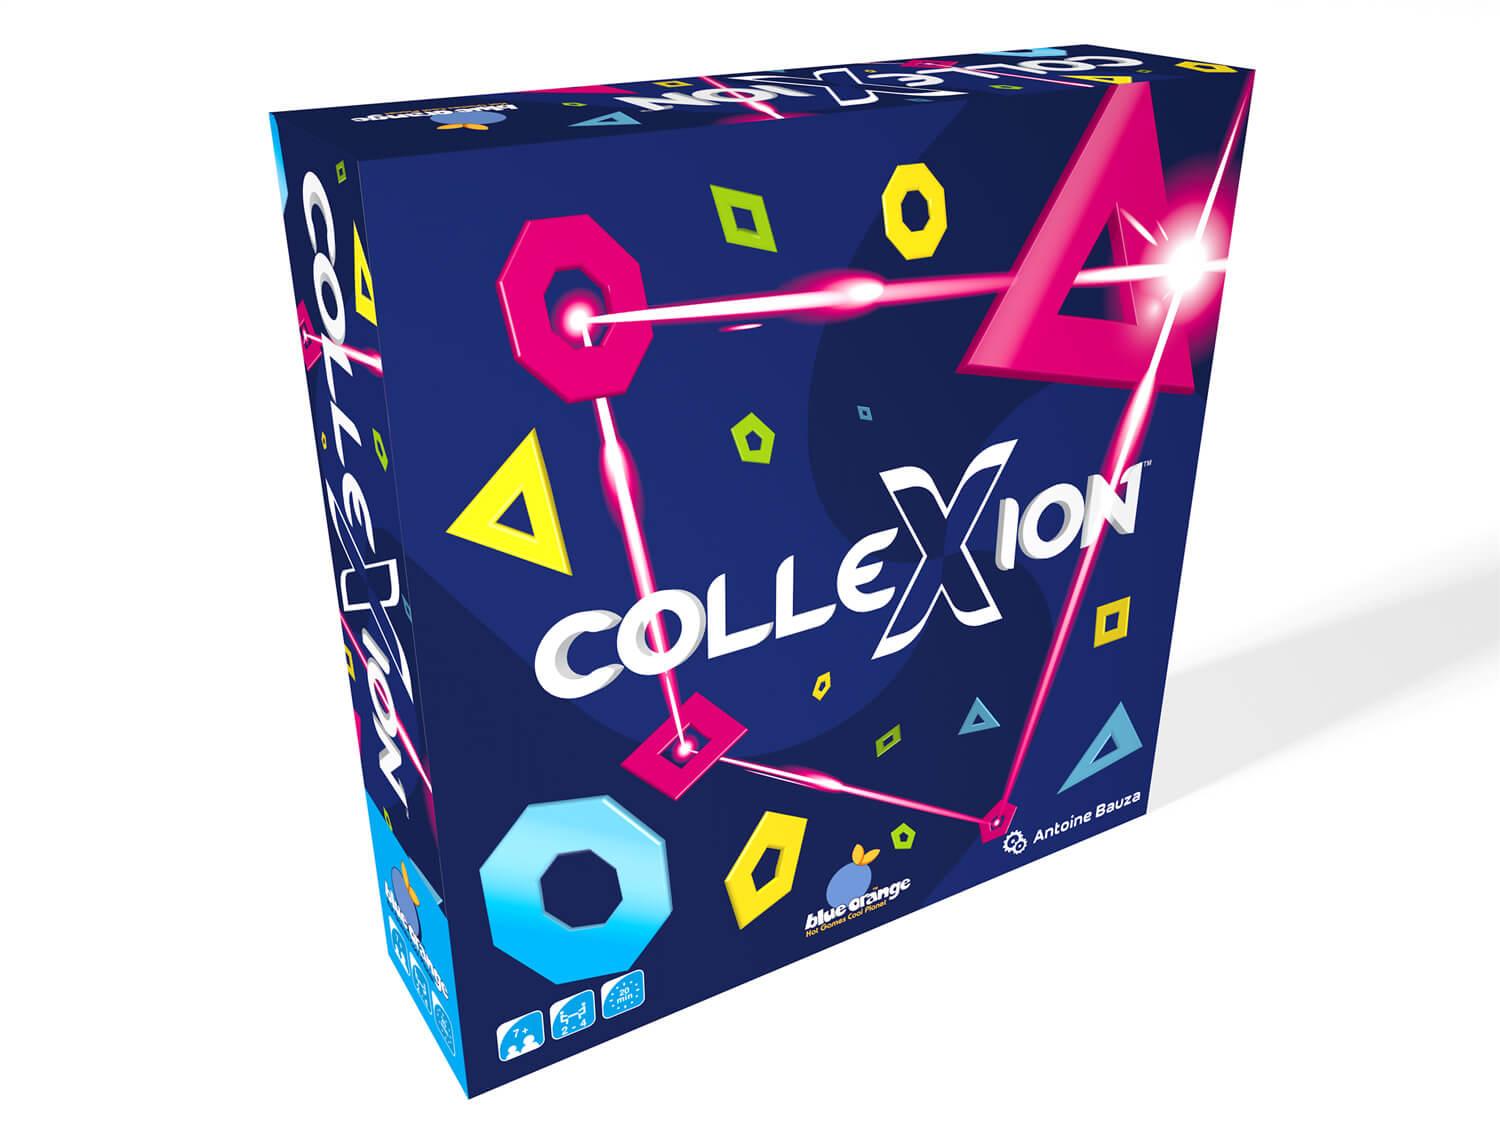 ColleXion 3D Box